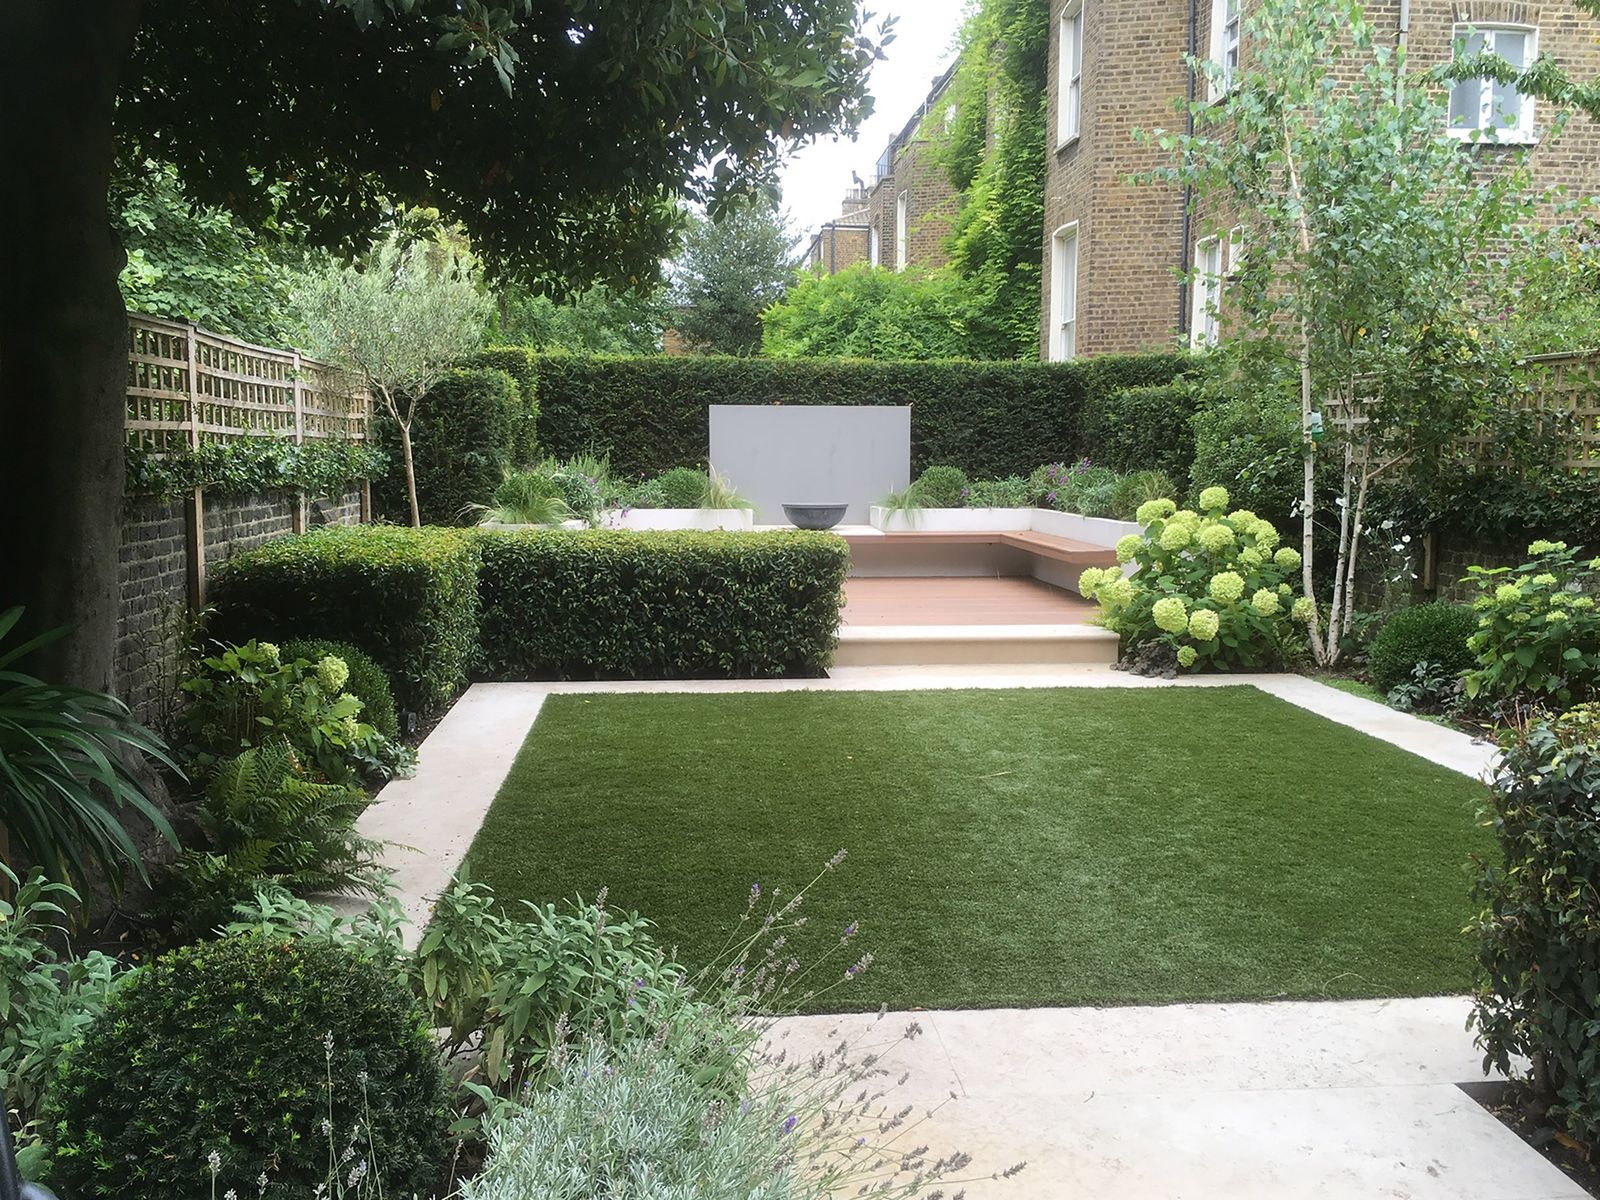 Lawn edging ideas: 15 ways to border your grass in style | Gardeningetc